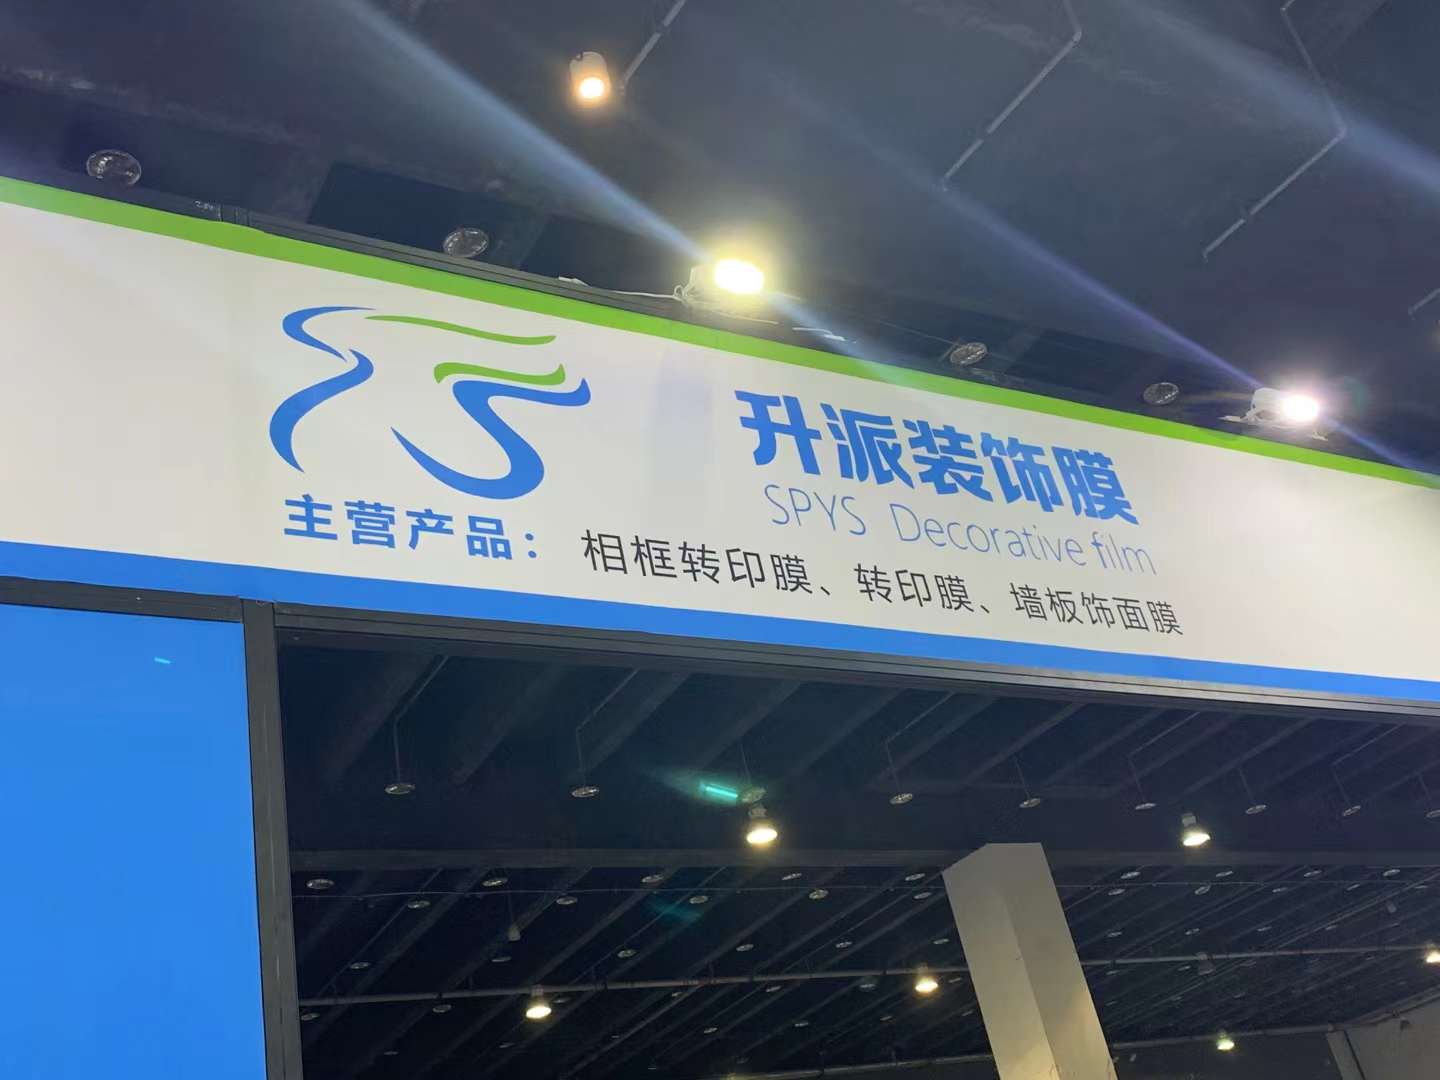 Yiwu Custom Furniture Expo ကို တရားဝင်ကျင်းပခဲ့ပါသည်။